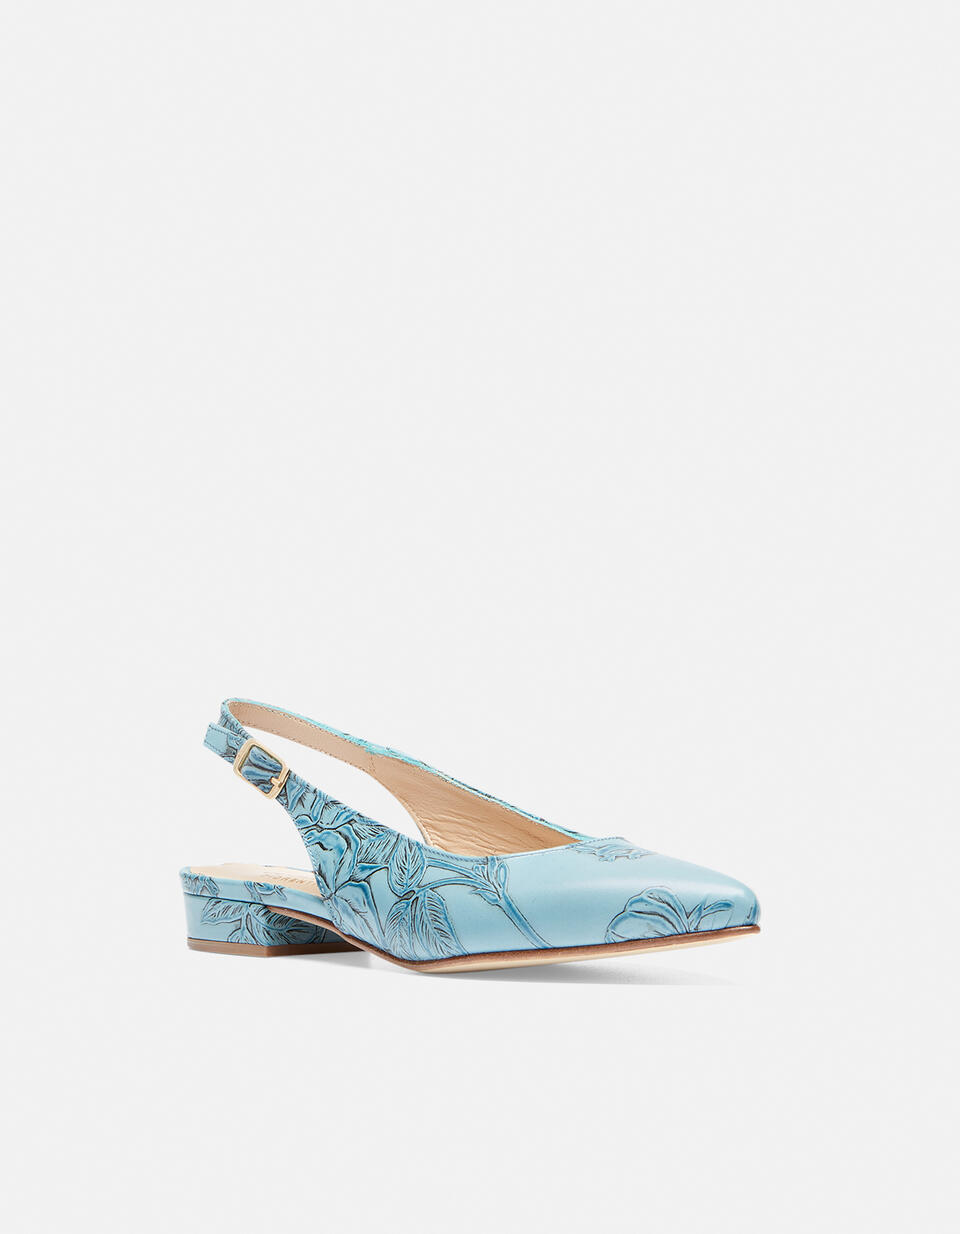 Slingback Mimi Light blue  - Woman Shoes - Shoes - Cuoieria Fiorentina